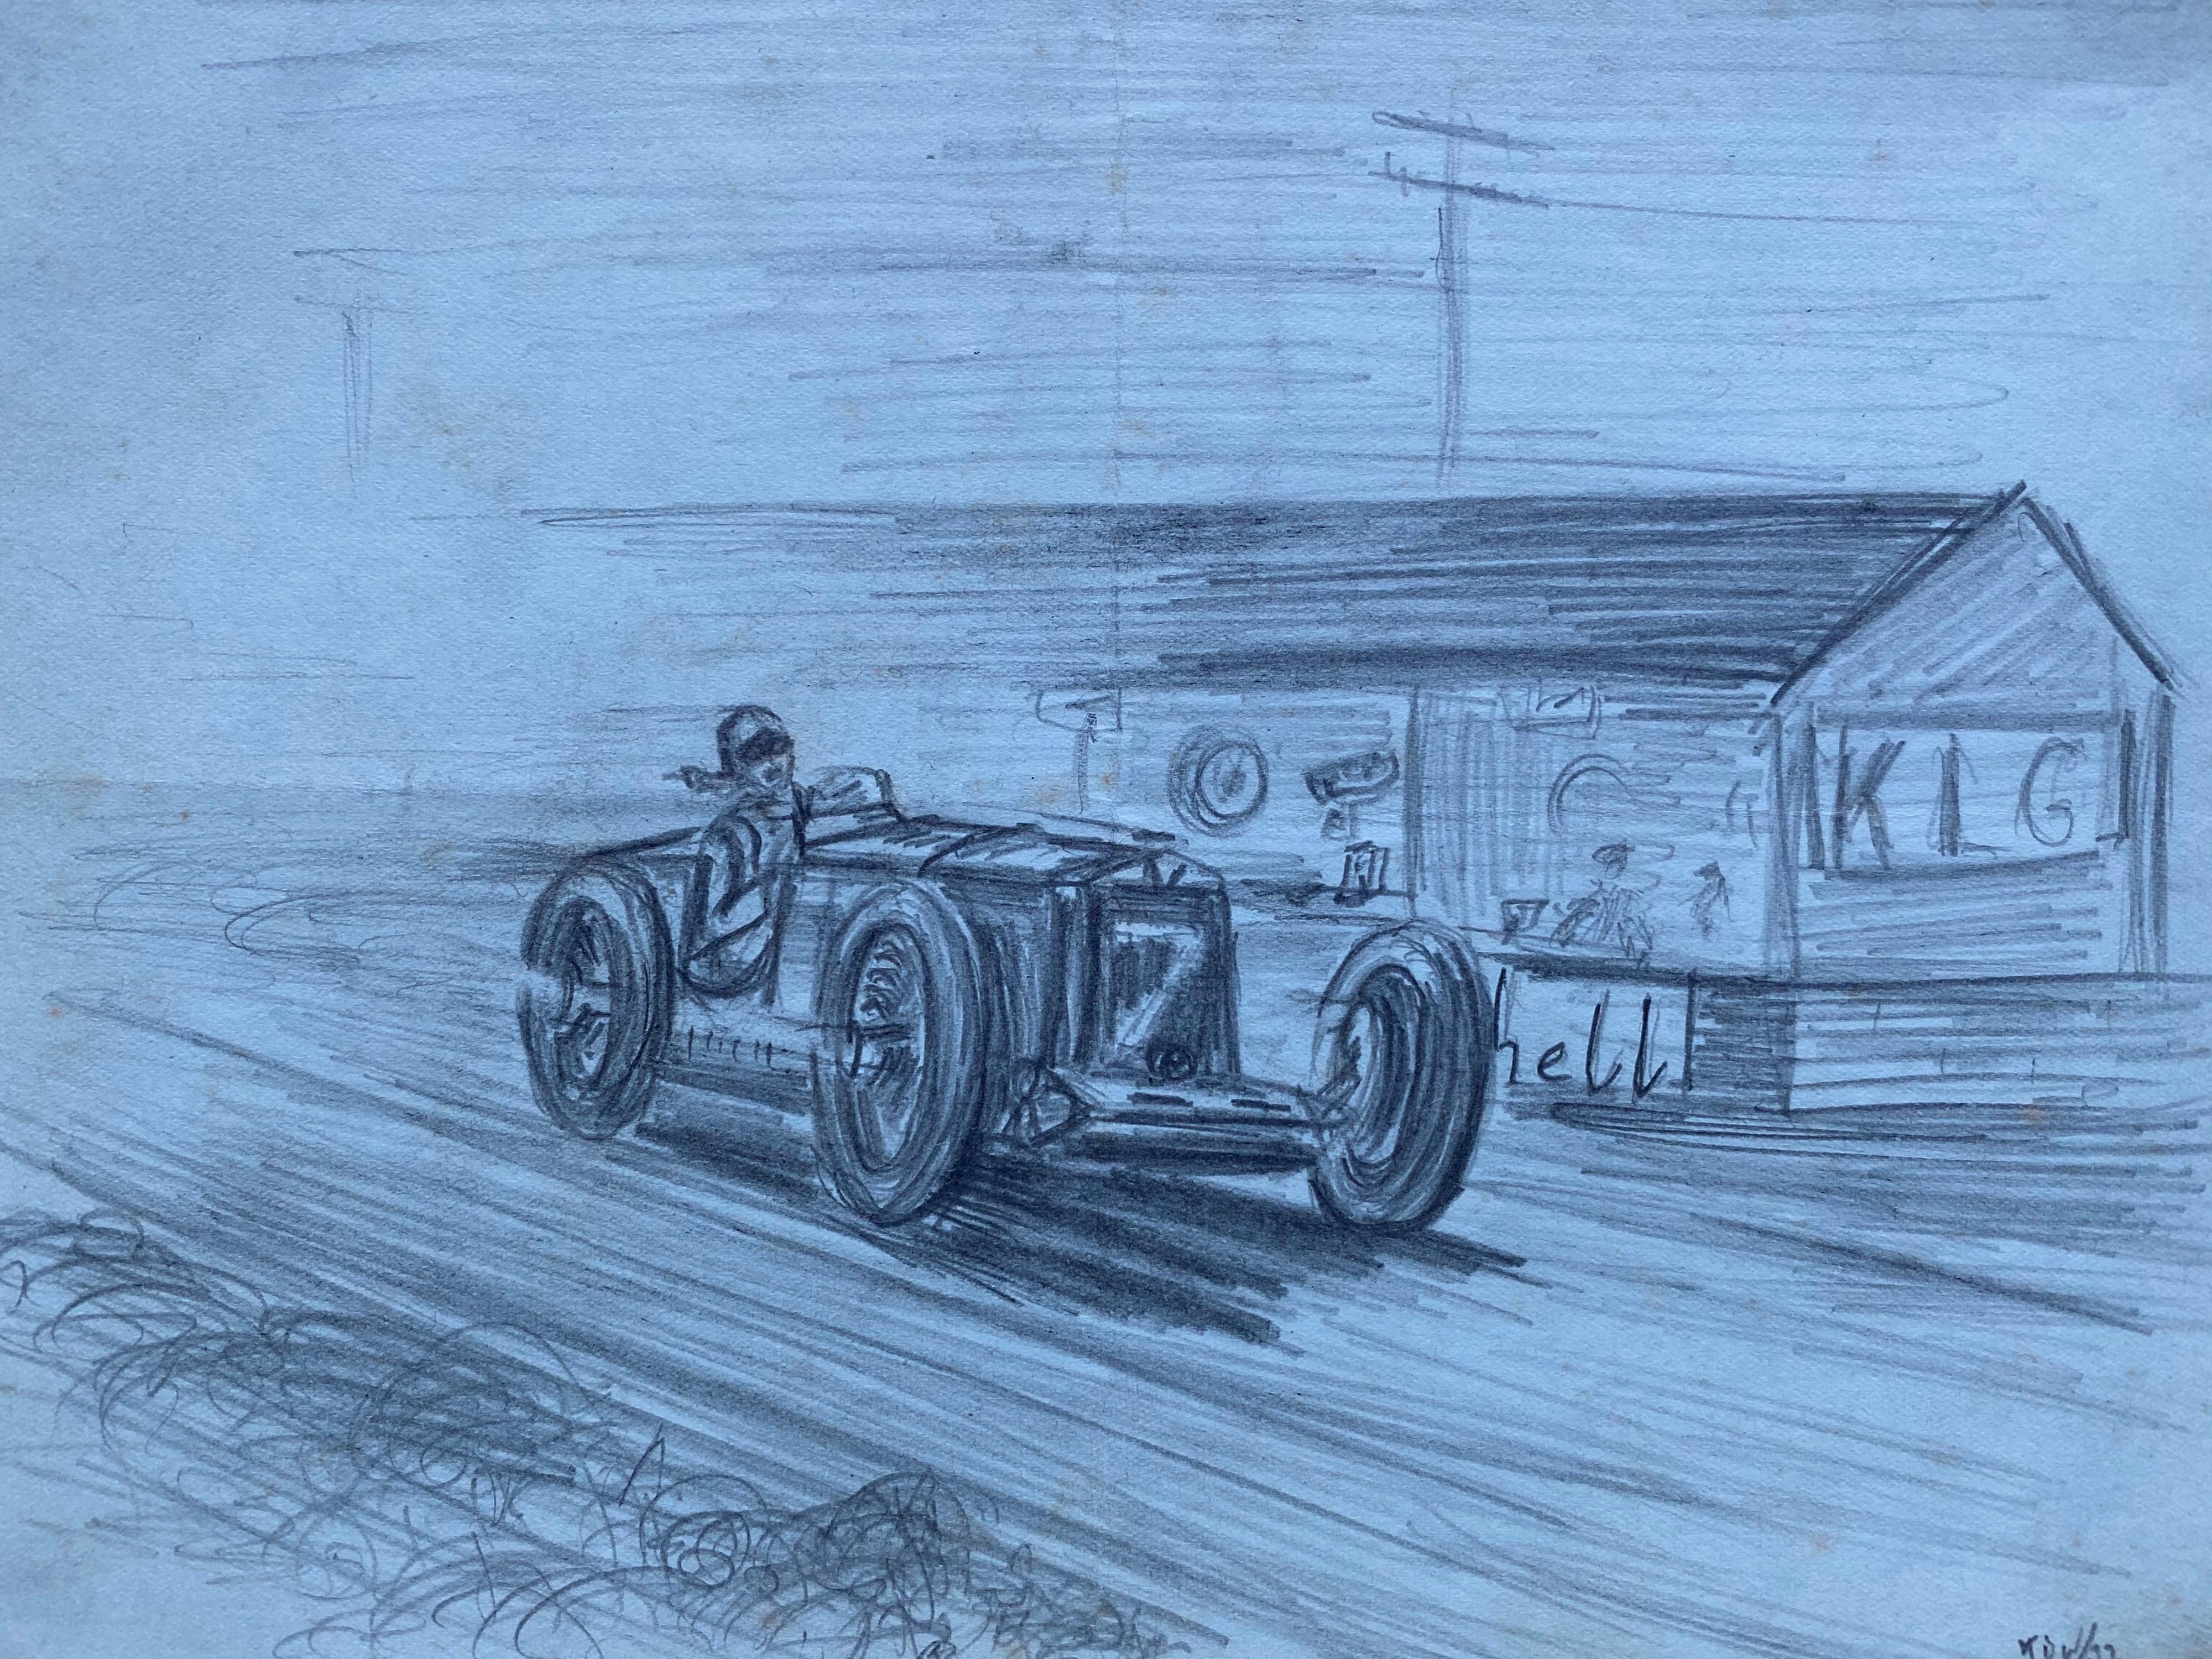 Original 1930's Vintage Motor Car Racing Original Drawing Signed Dated